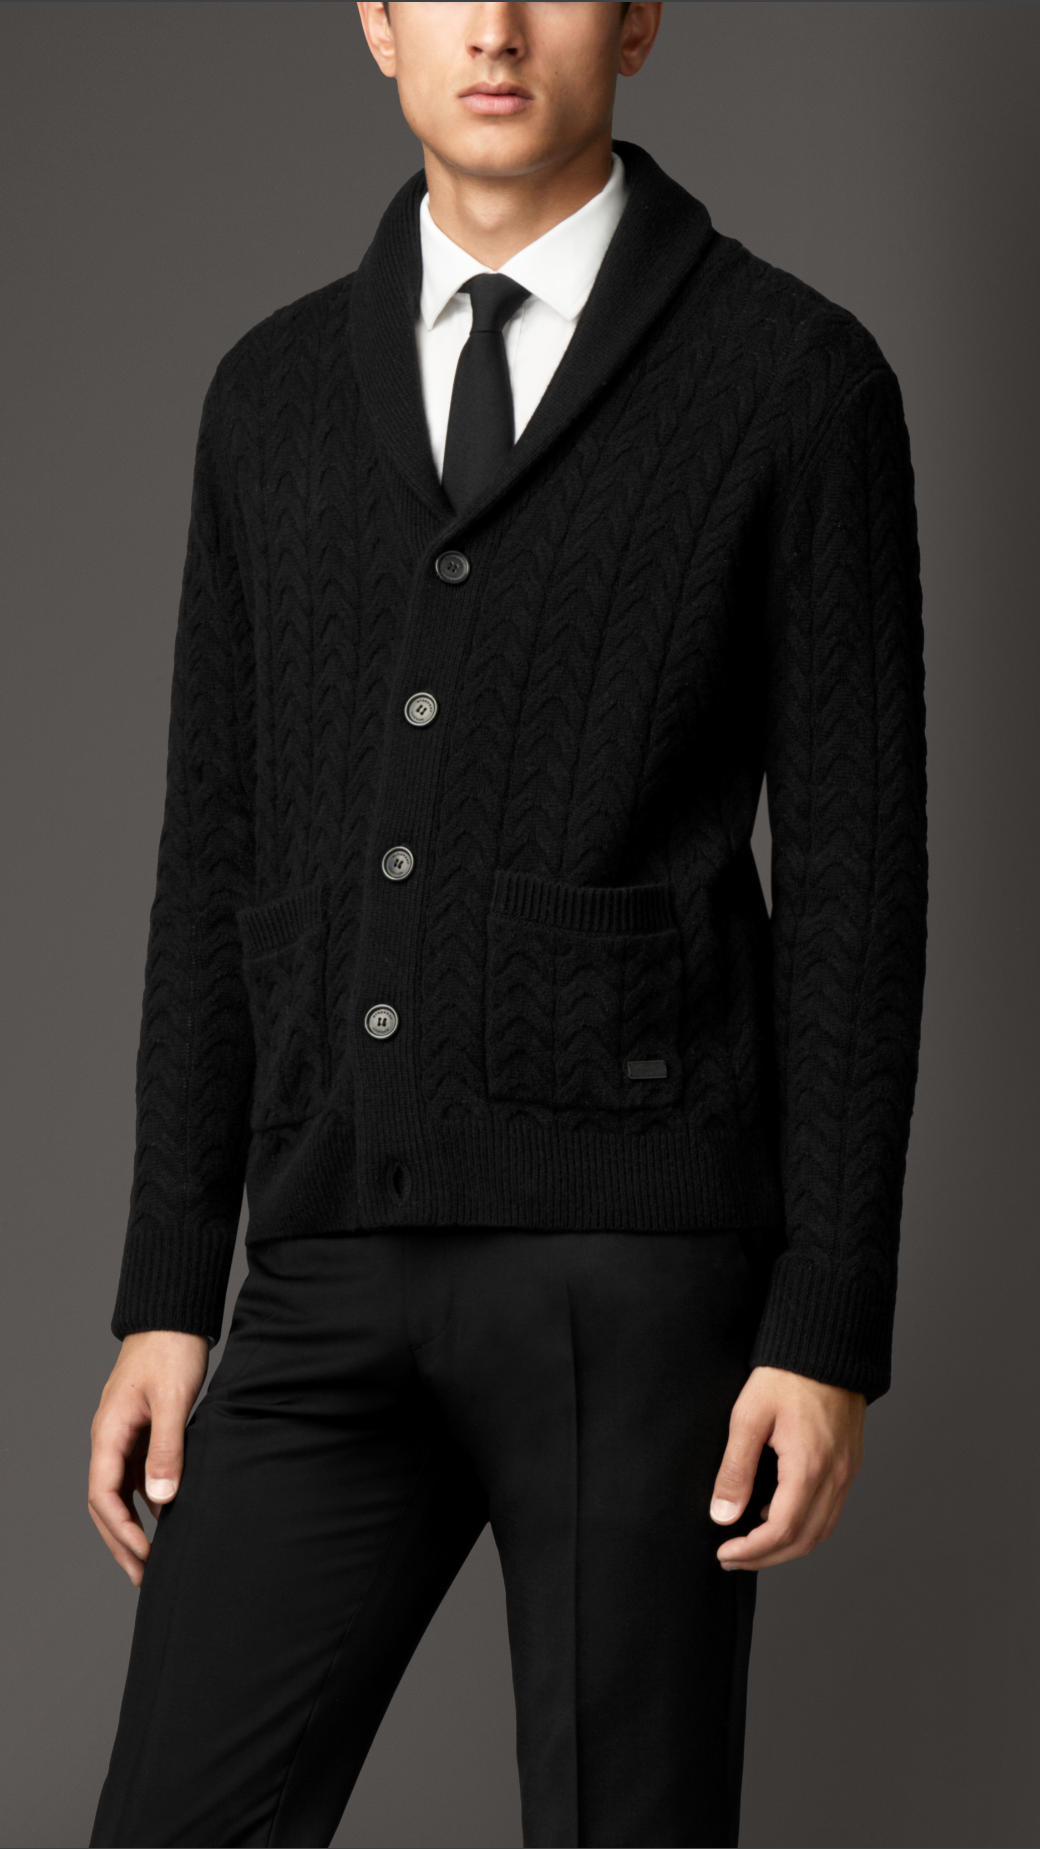 Burberry Aran Knit Wool Cashmere Cardigan in Black for Men - Lyst